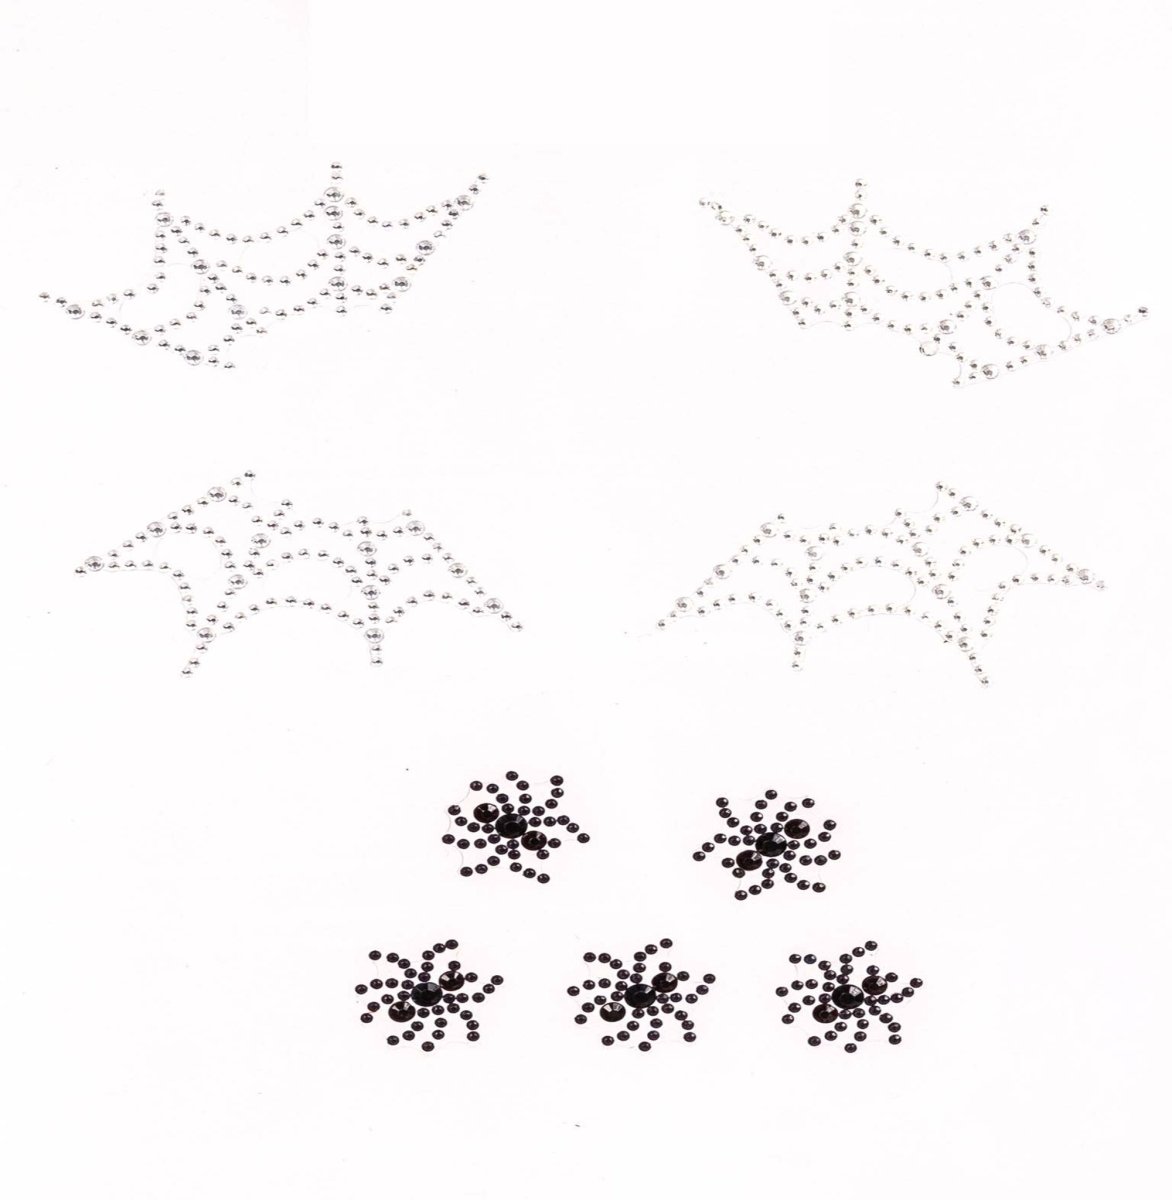 Spider web face jewels sticker. - worldclasscostumes